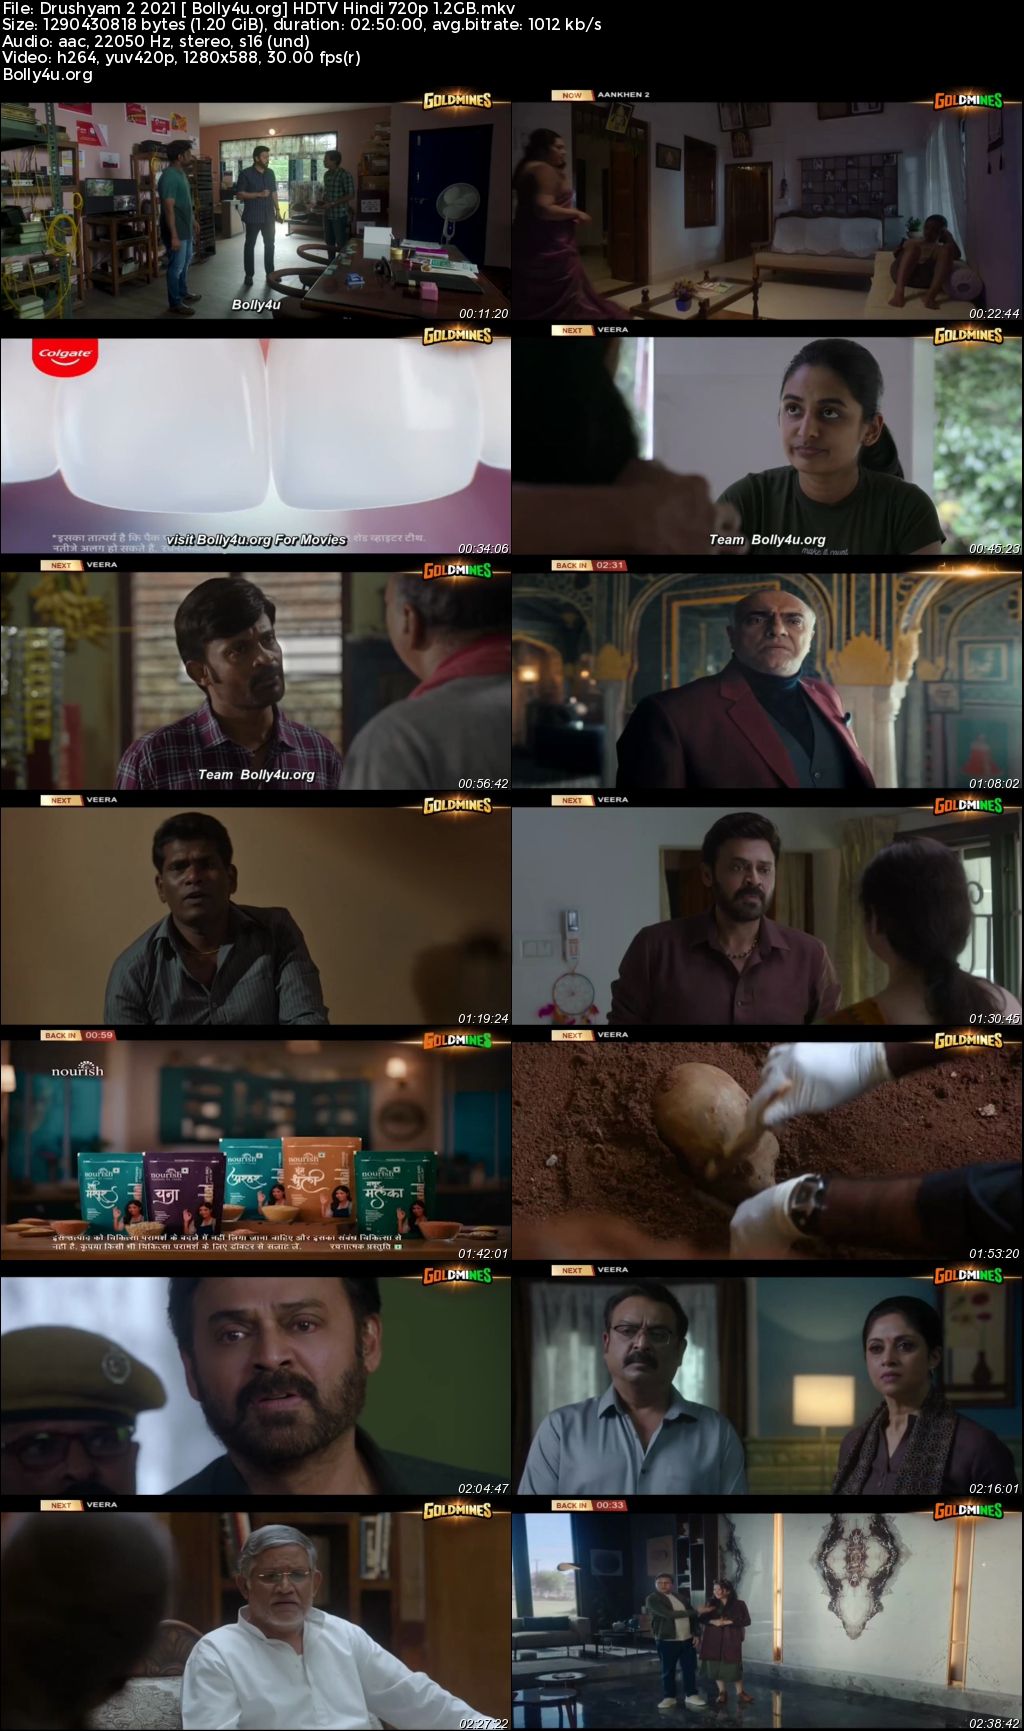 Drushyam 2 2021 HDTV Hindi Dubbed Full Movie Download 720p 480p